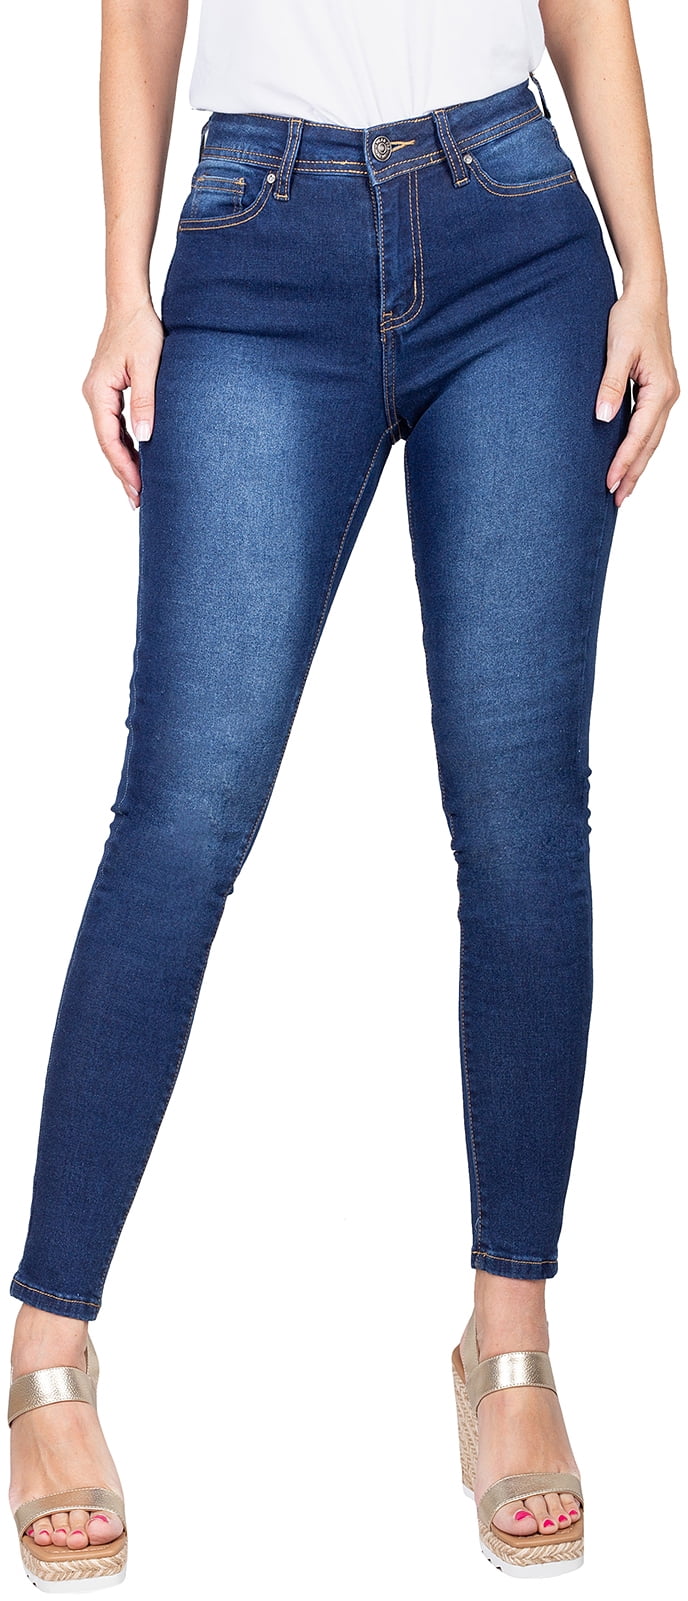 QISIWOLE Flare Jeans for Women Ladies Elastic Pull-On Skinny Flared Leg  Pants Bootcut Denim Jeggings